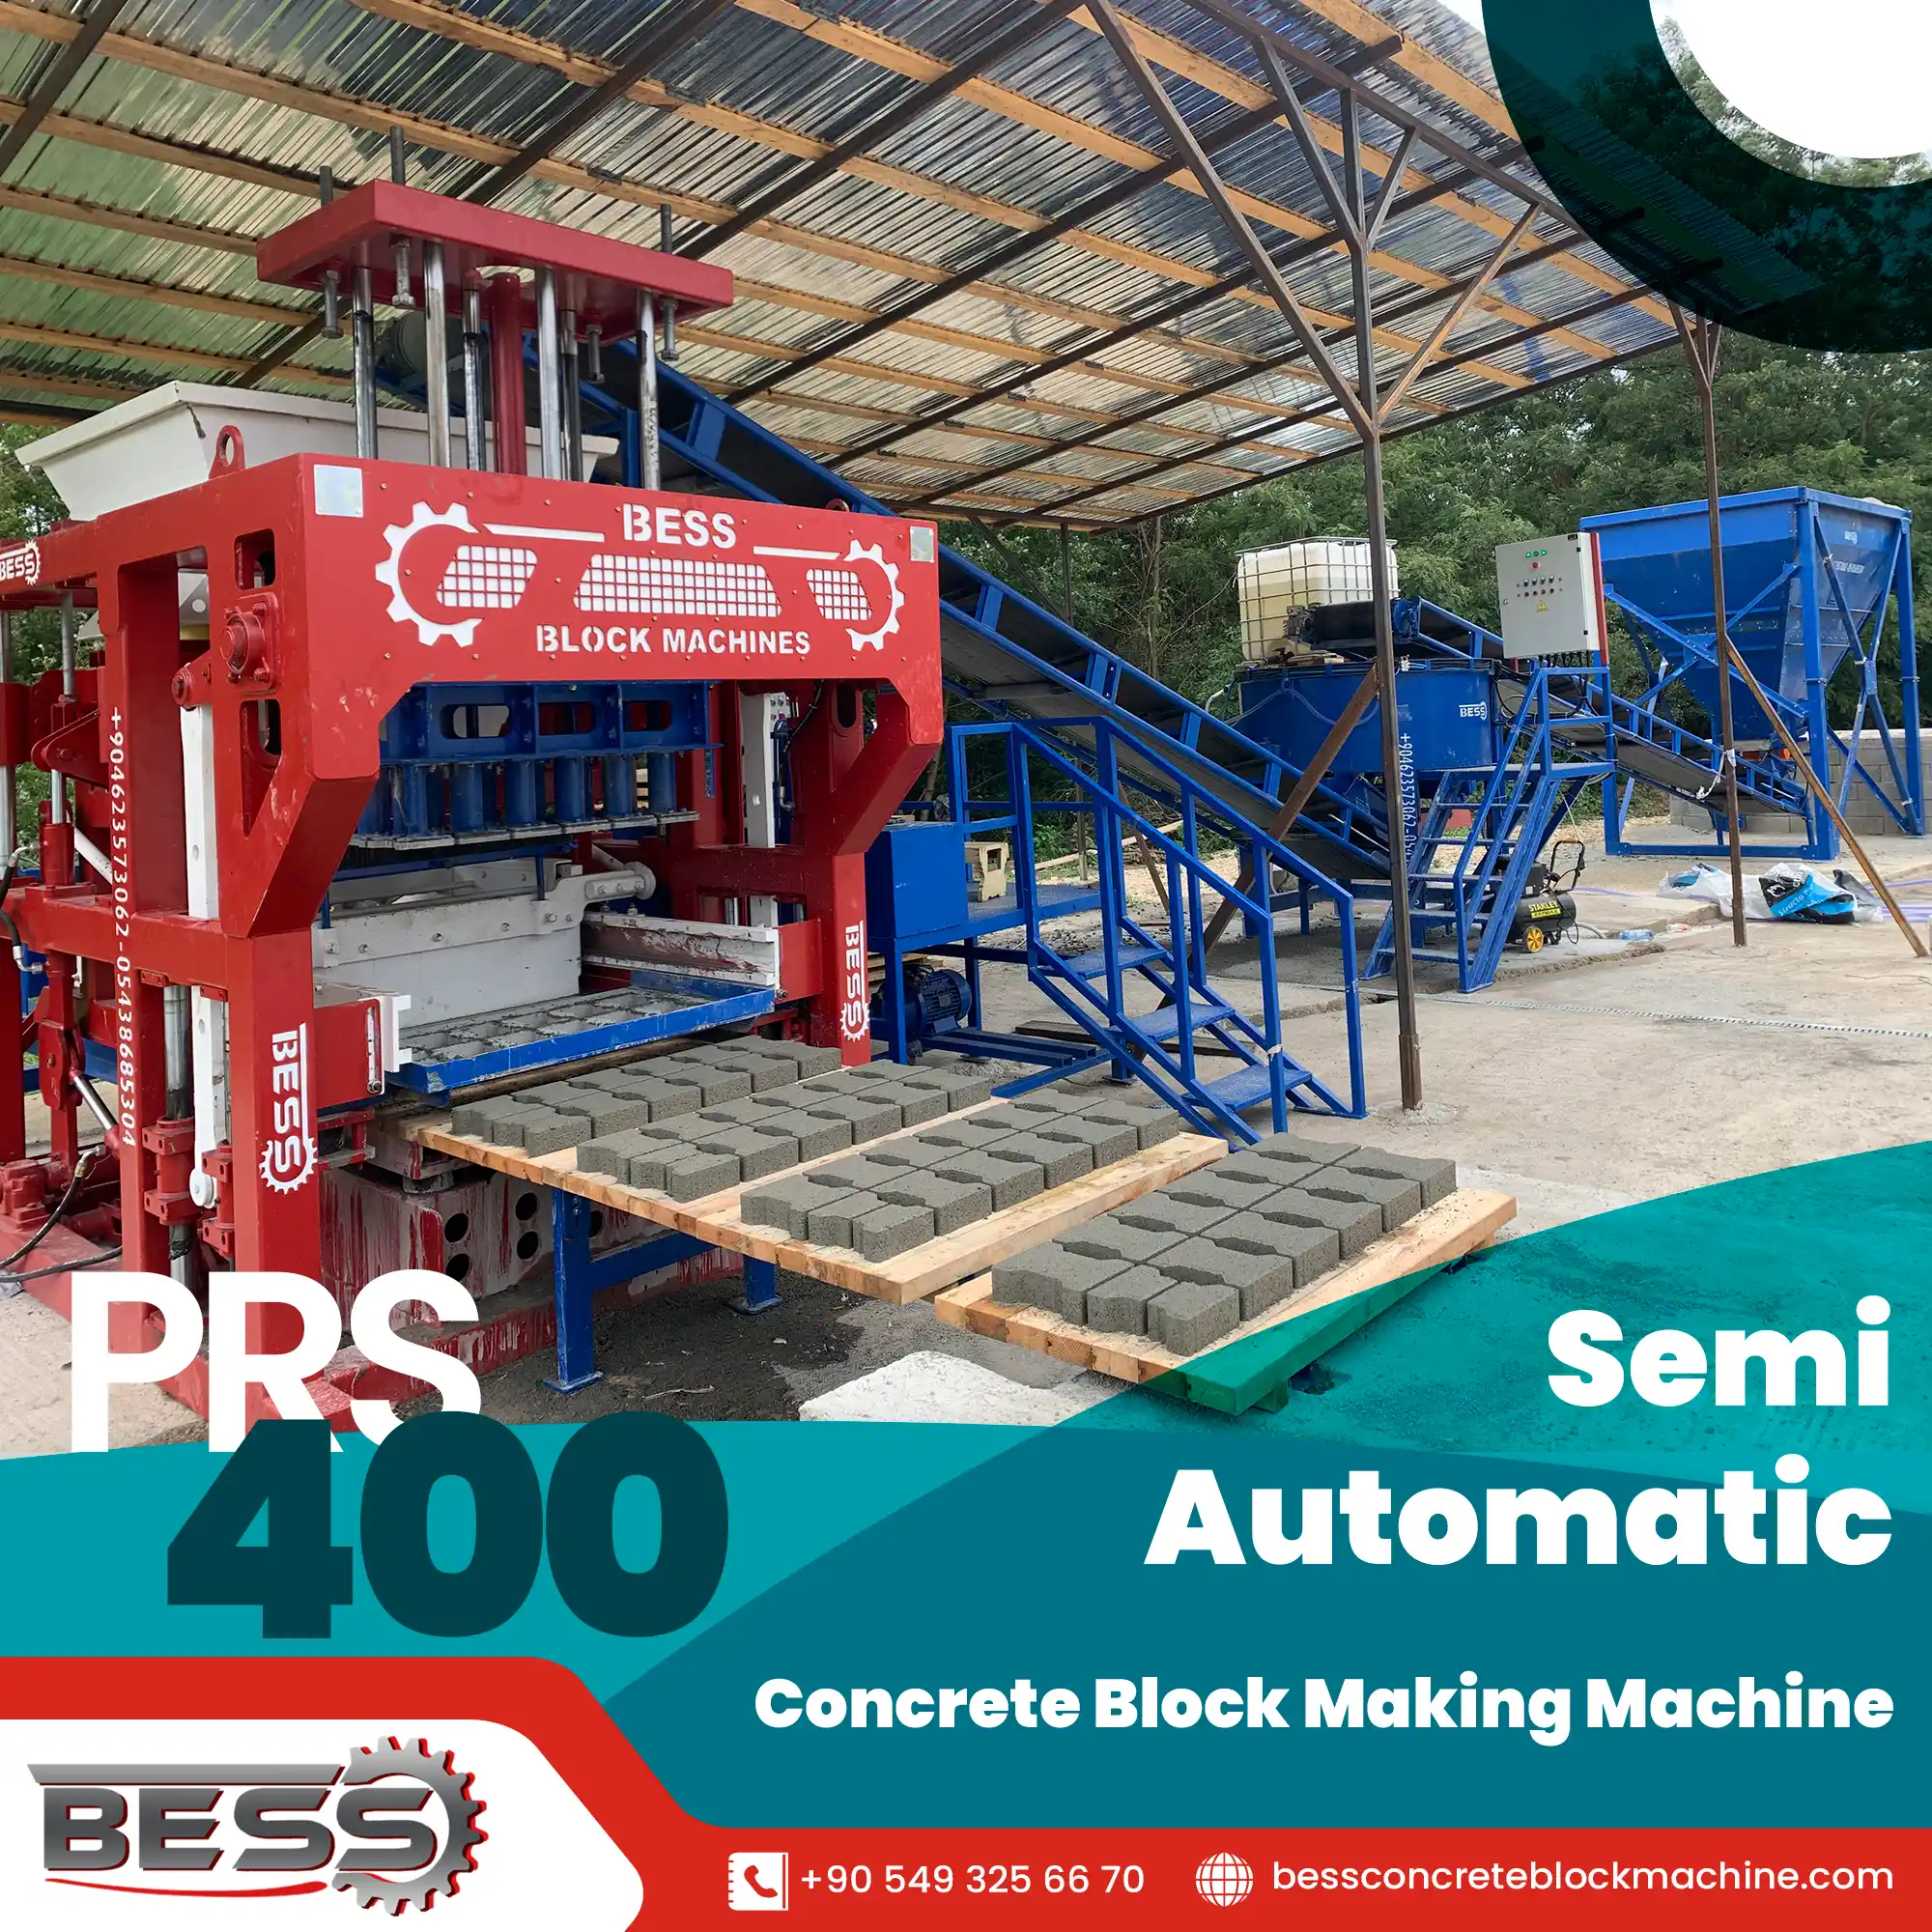 BESS SemiAutomatic PRS400 BlockMakingMachine Georgia